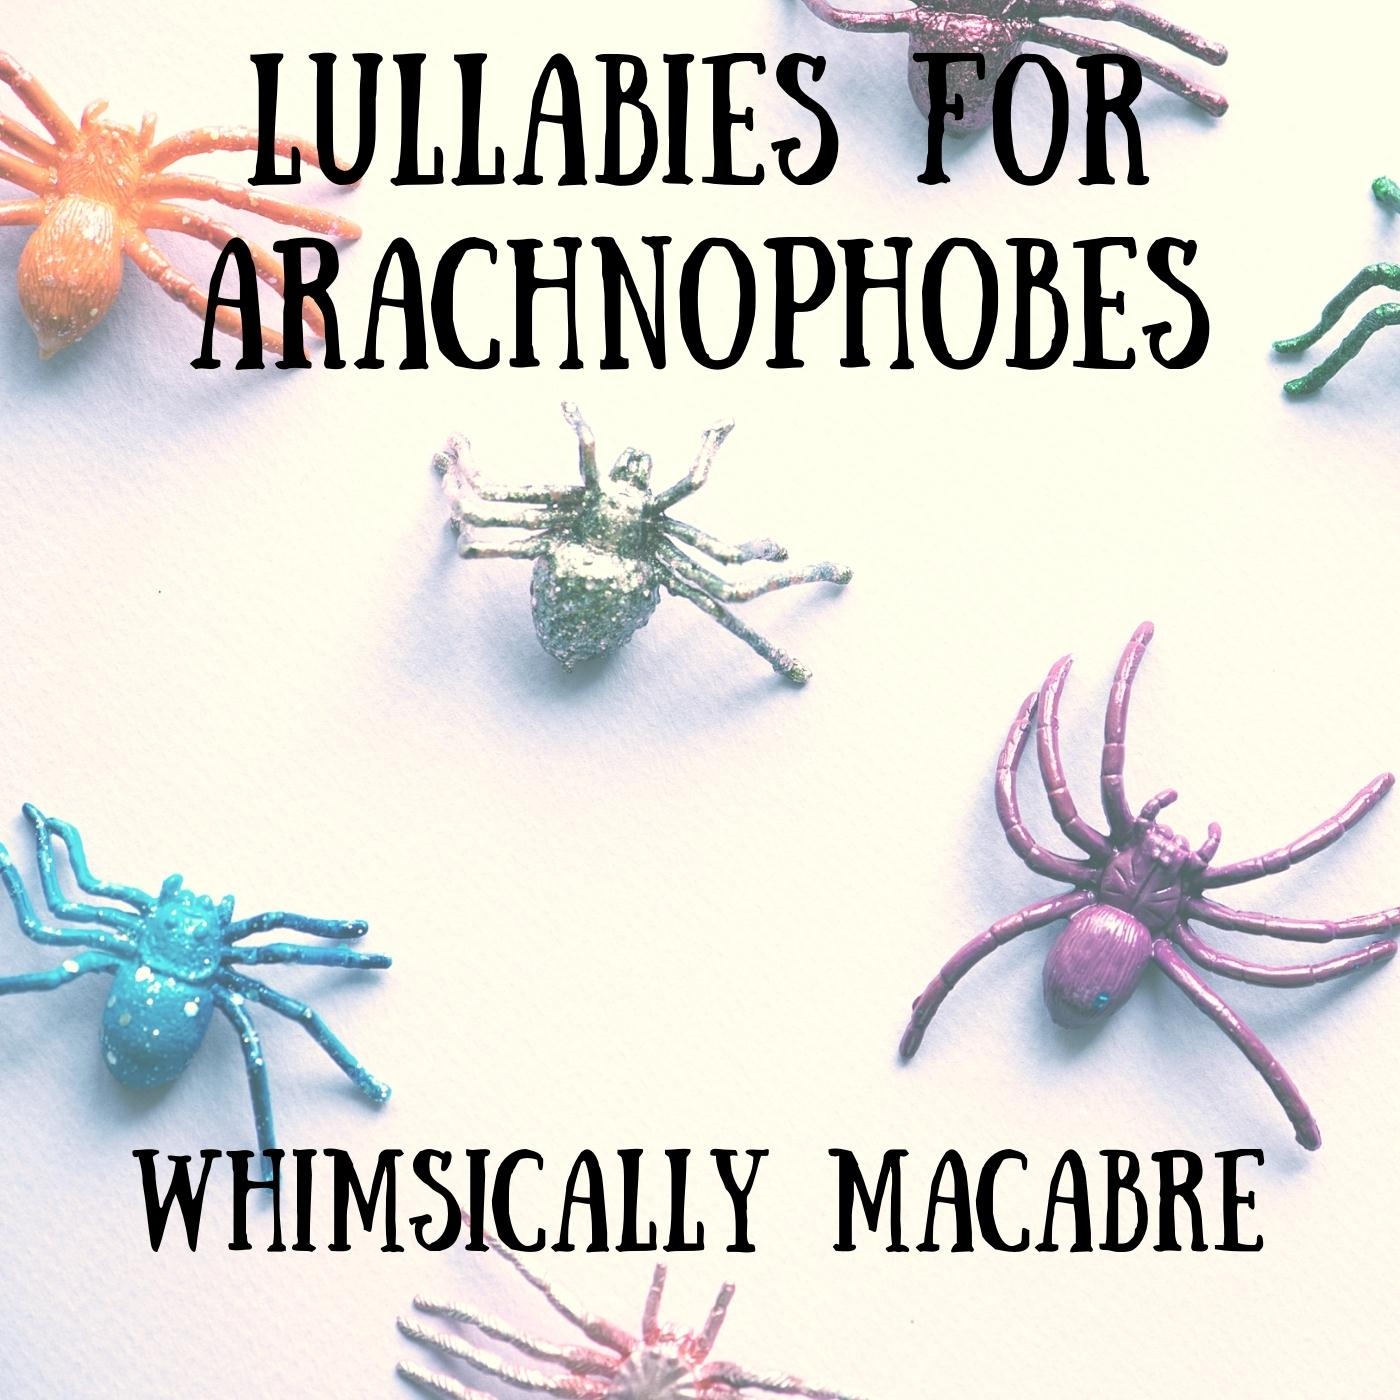 Lullabies for Arachnophobes